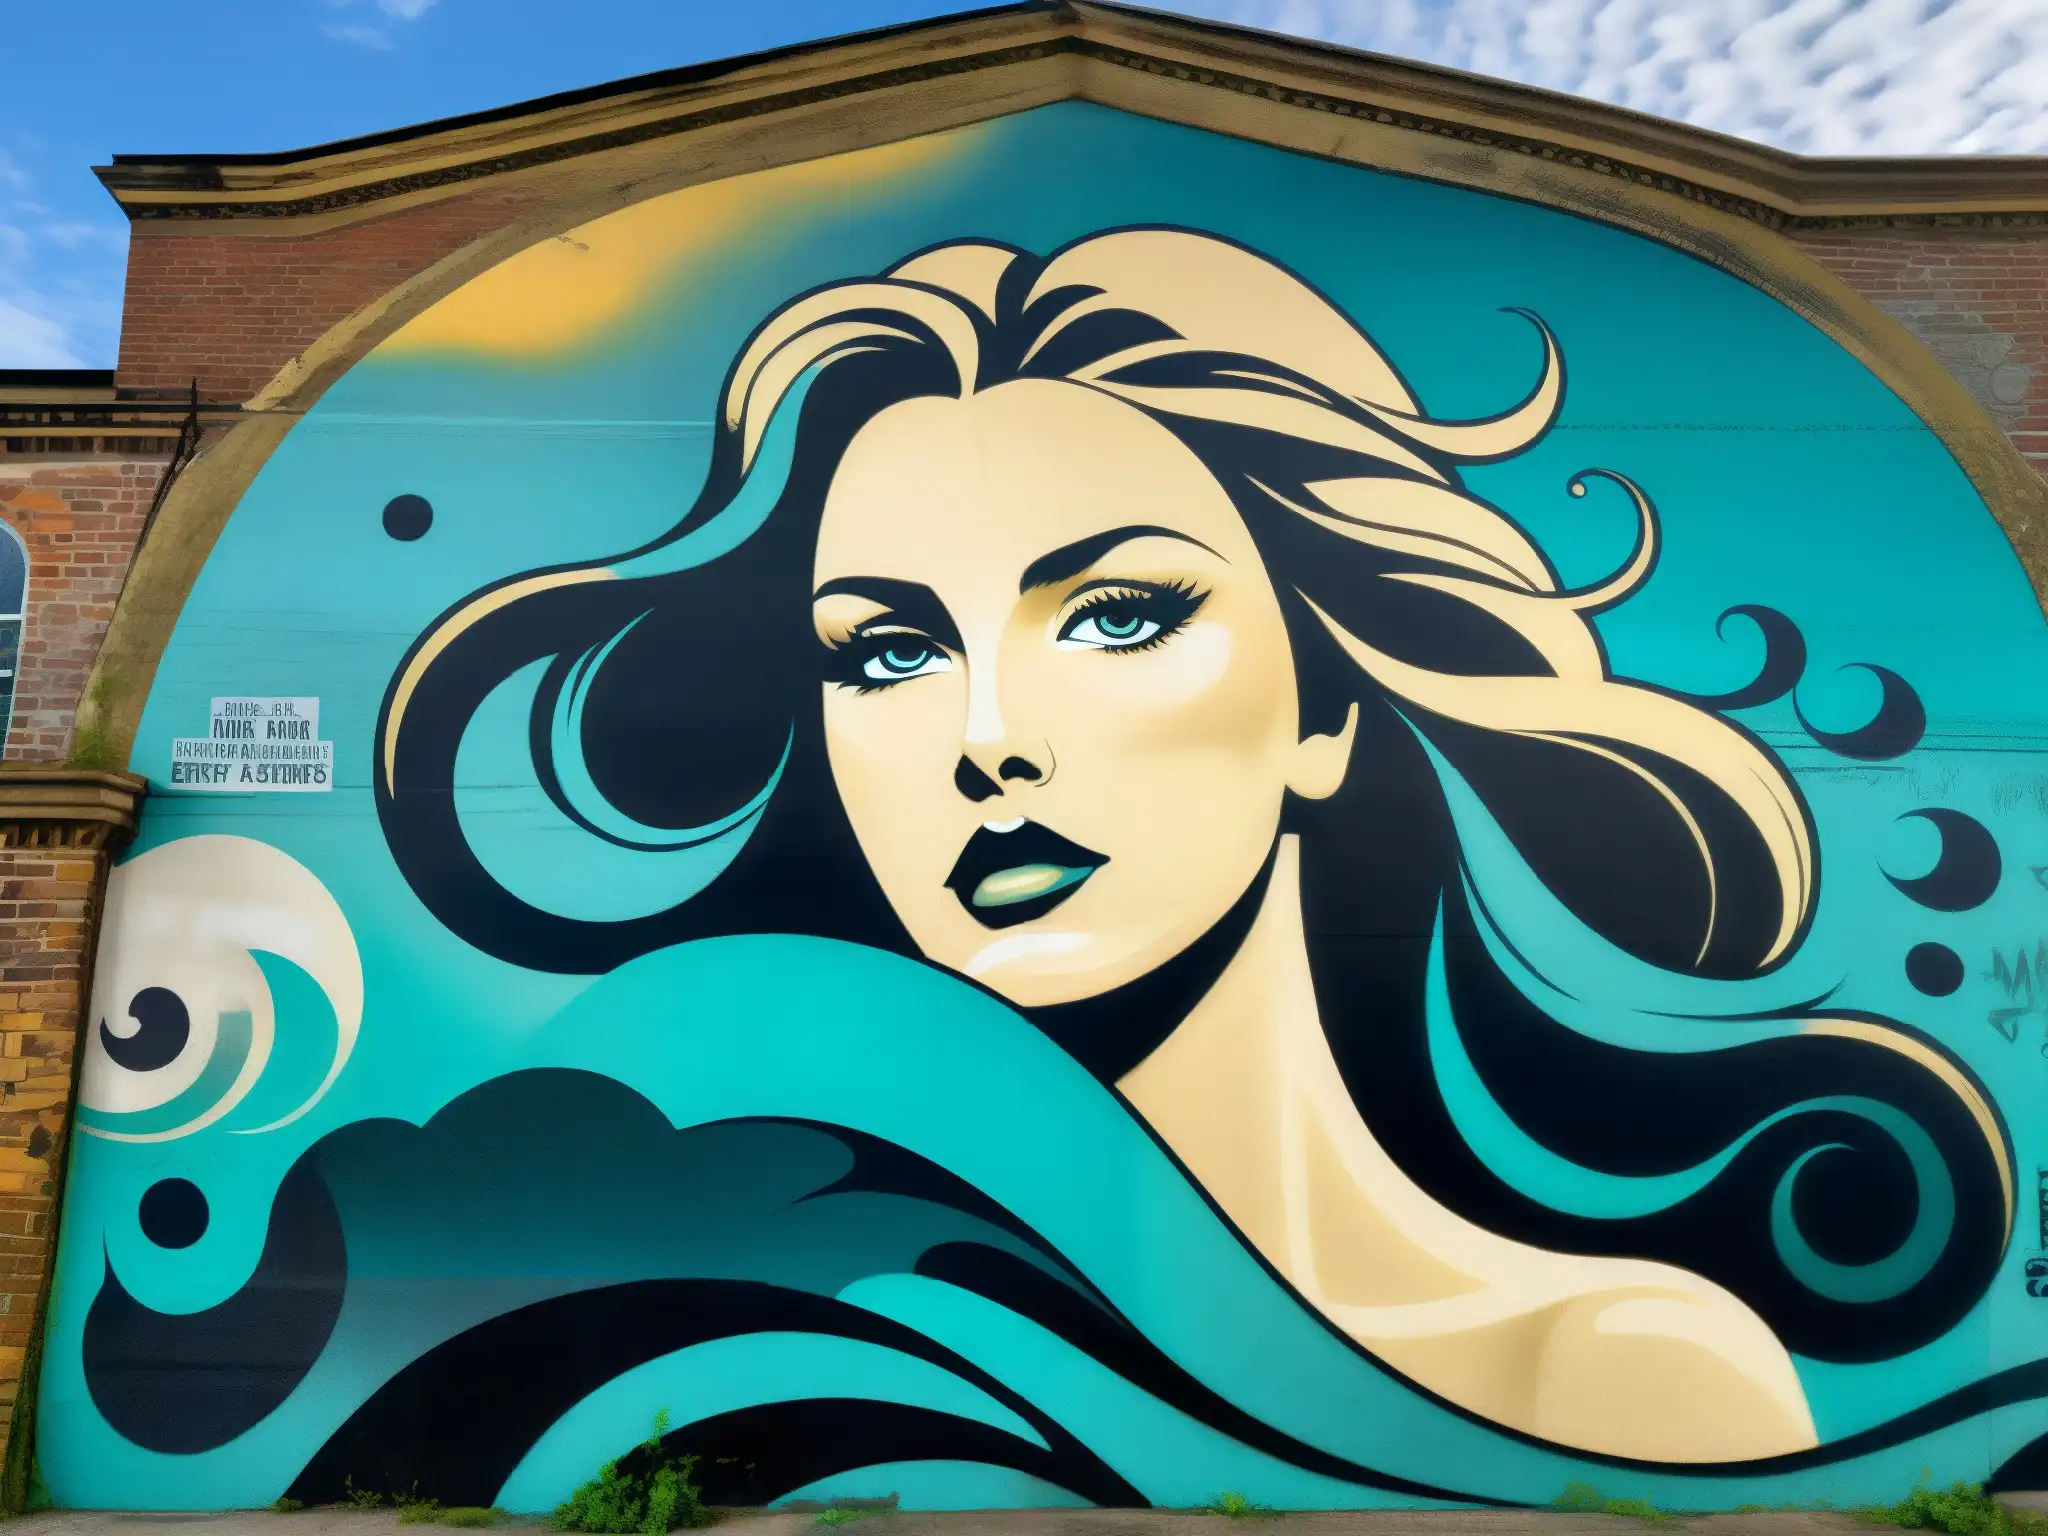 Vibrante mural urbano con sirenita de colores intensos, simbolismo psicológico sirenas leyendas urbanas